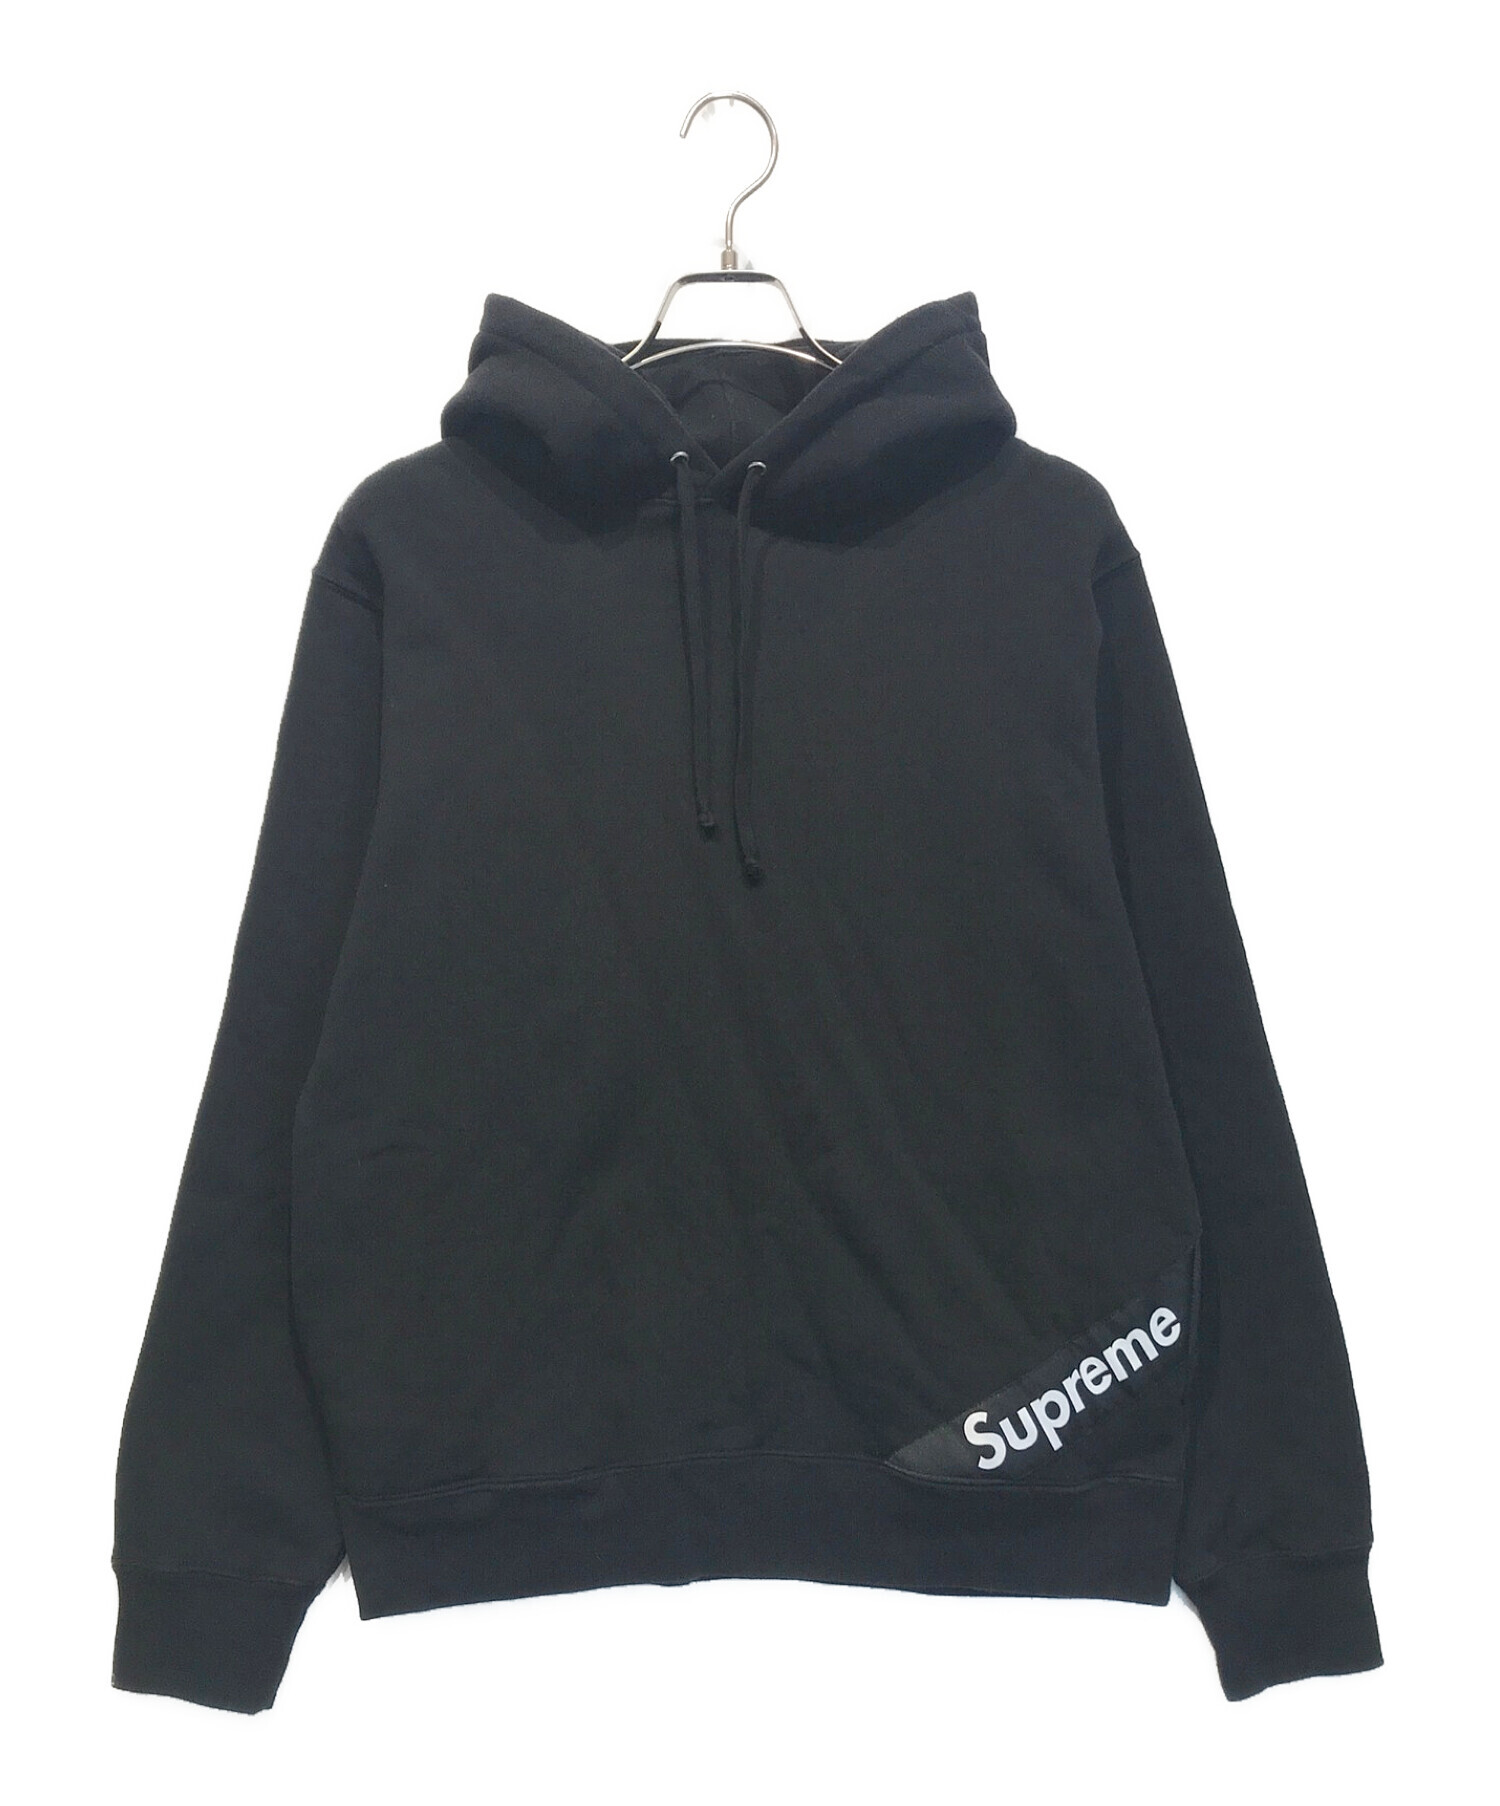 Supreme Corner Label Hooded Sweatshirt M